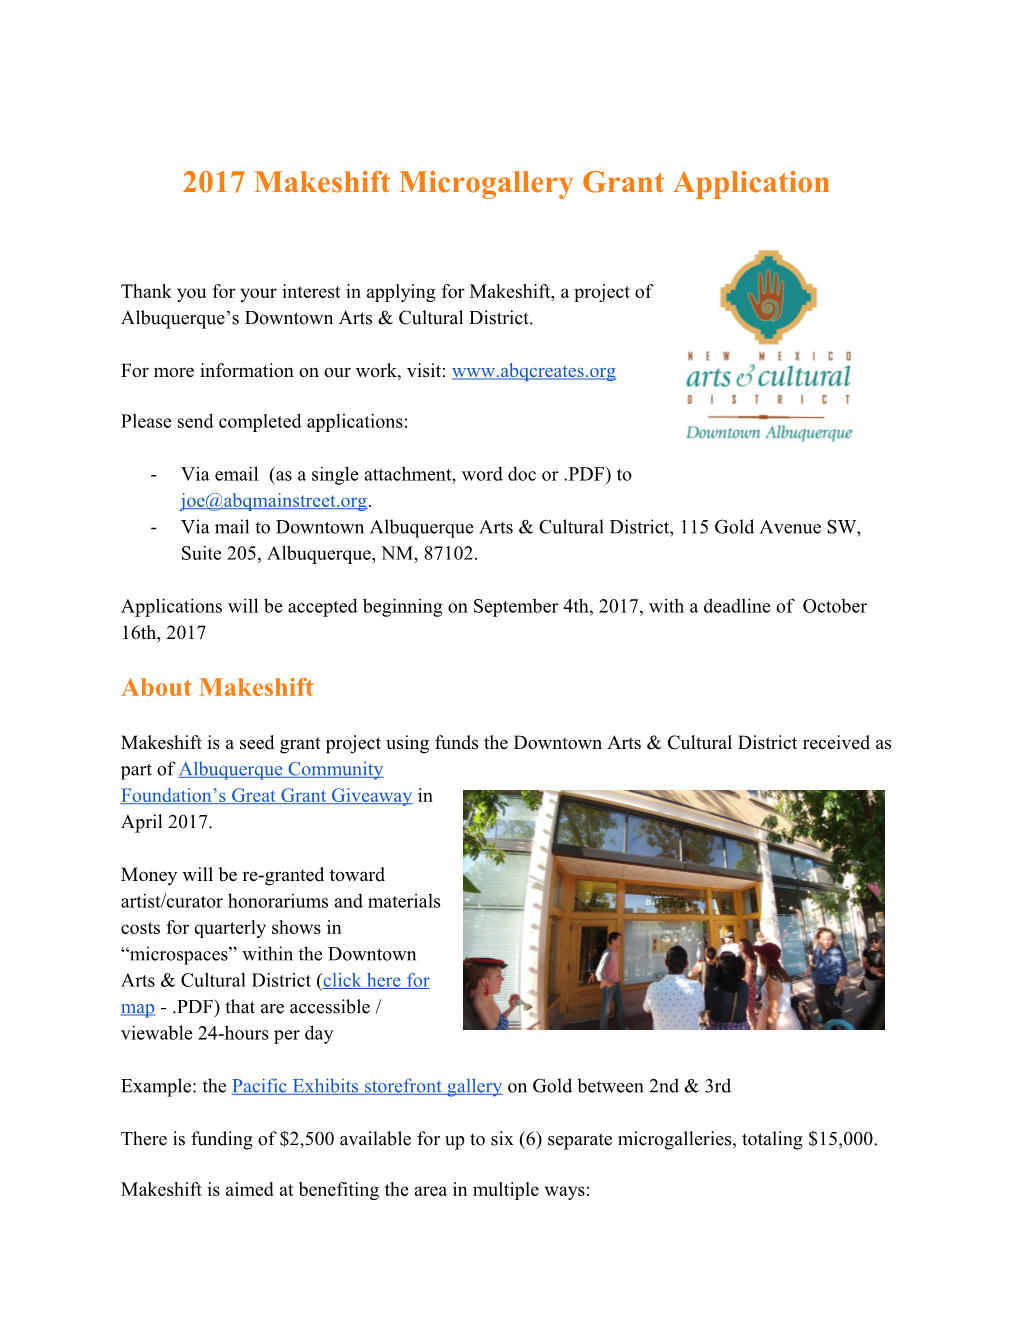 2017 Makeshift Microgallerygrant Application